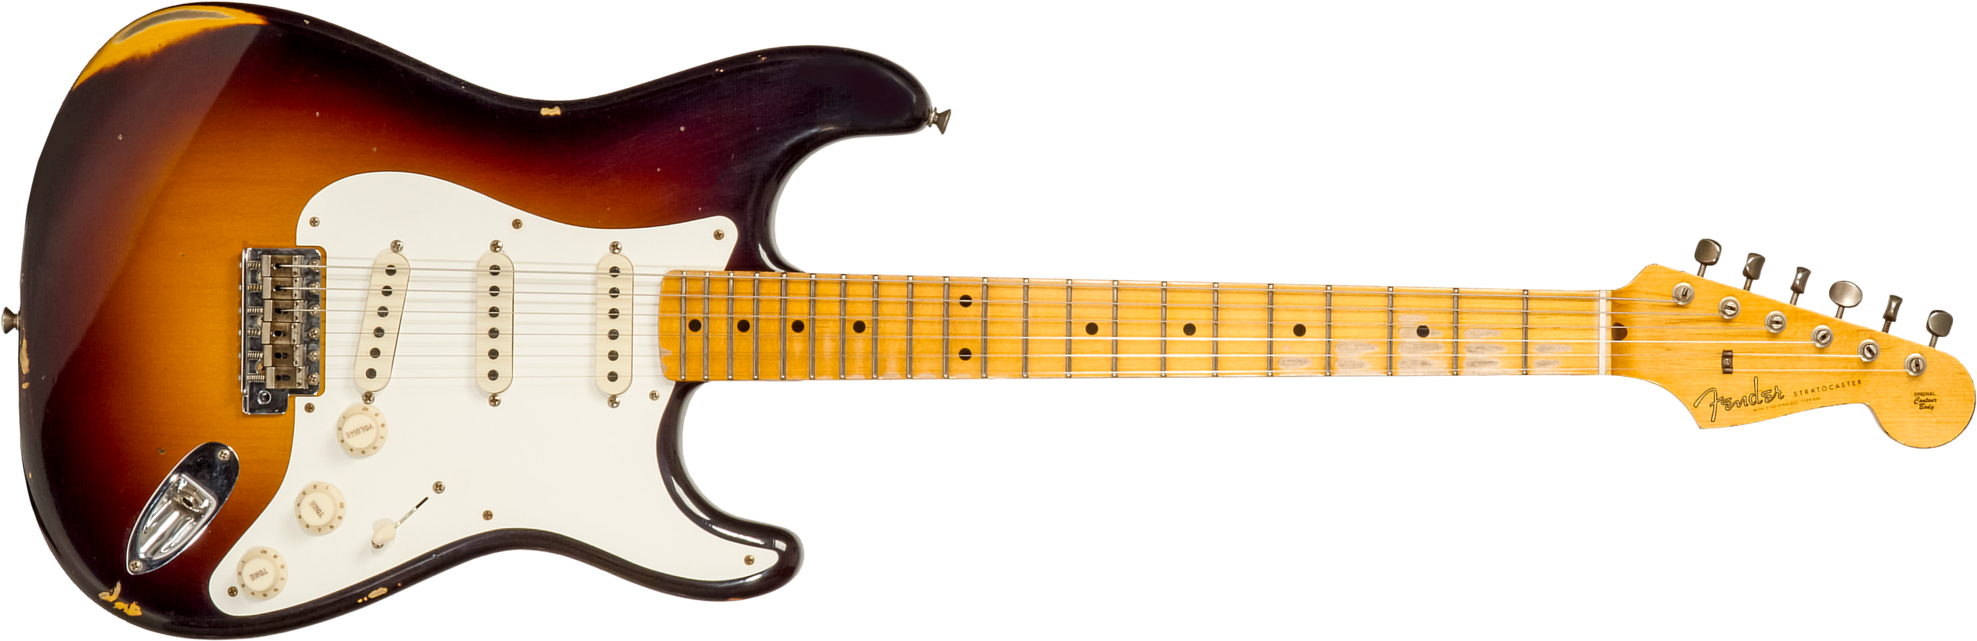 Fender Custom Shop Strat 1957 3s Trem Mn #cz571791 - Relic Wide Fade 2-color Sunburst - Elektrische gitaar in Str-vorm - Main picture